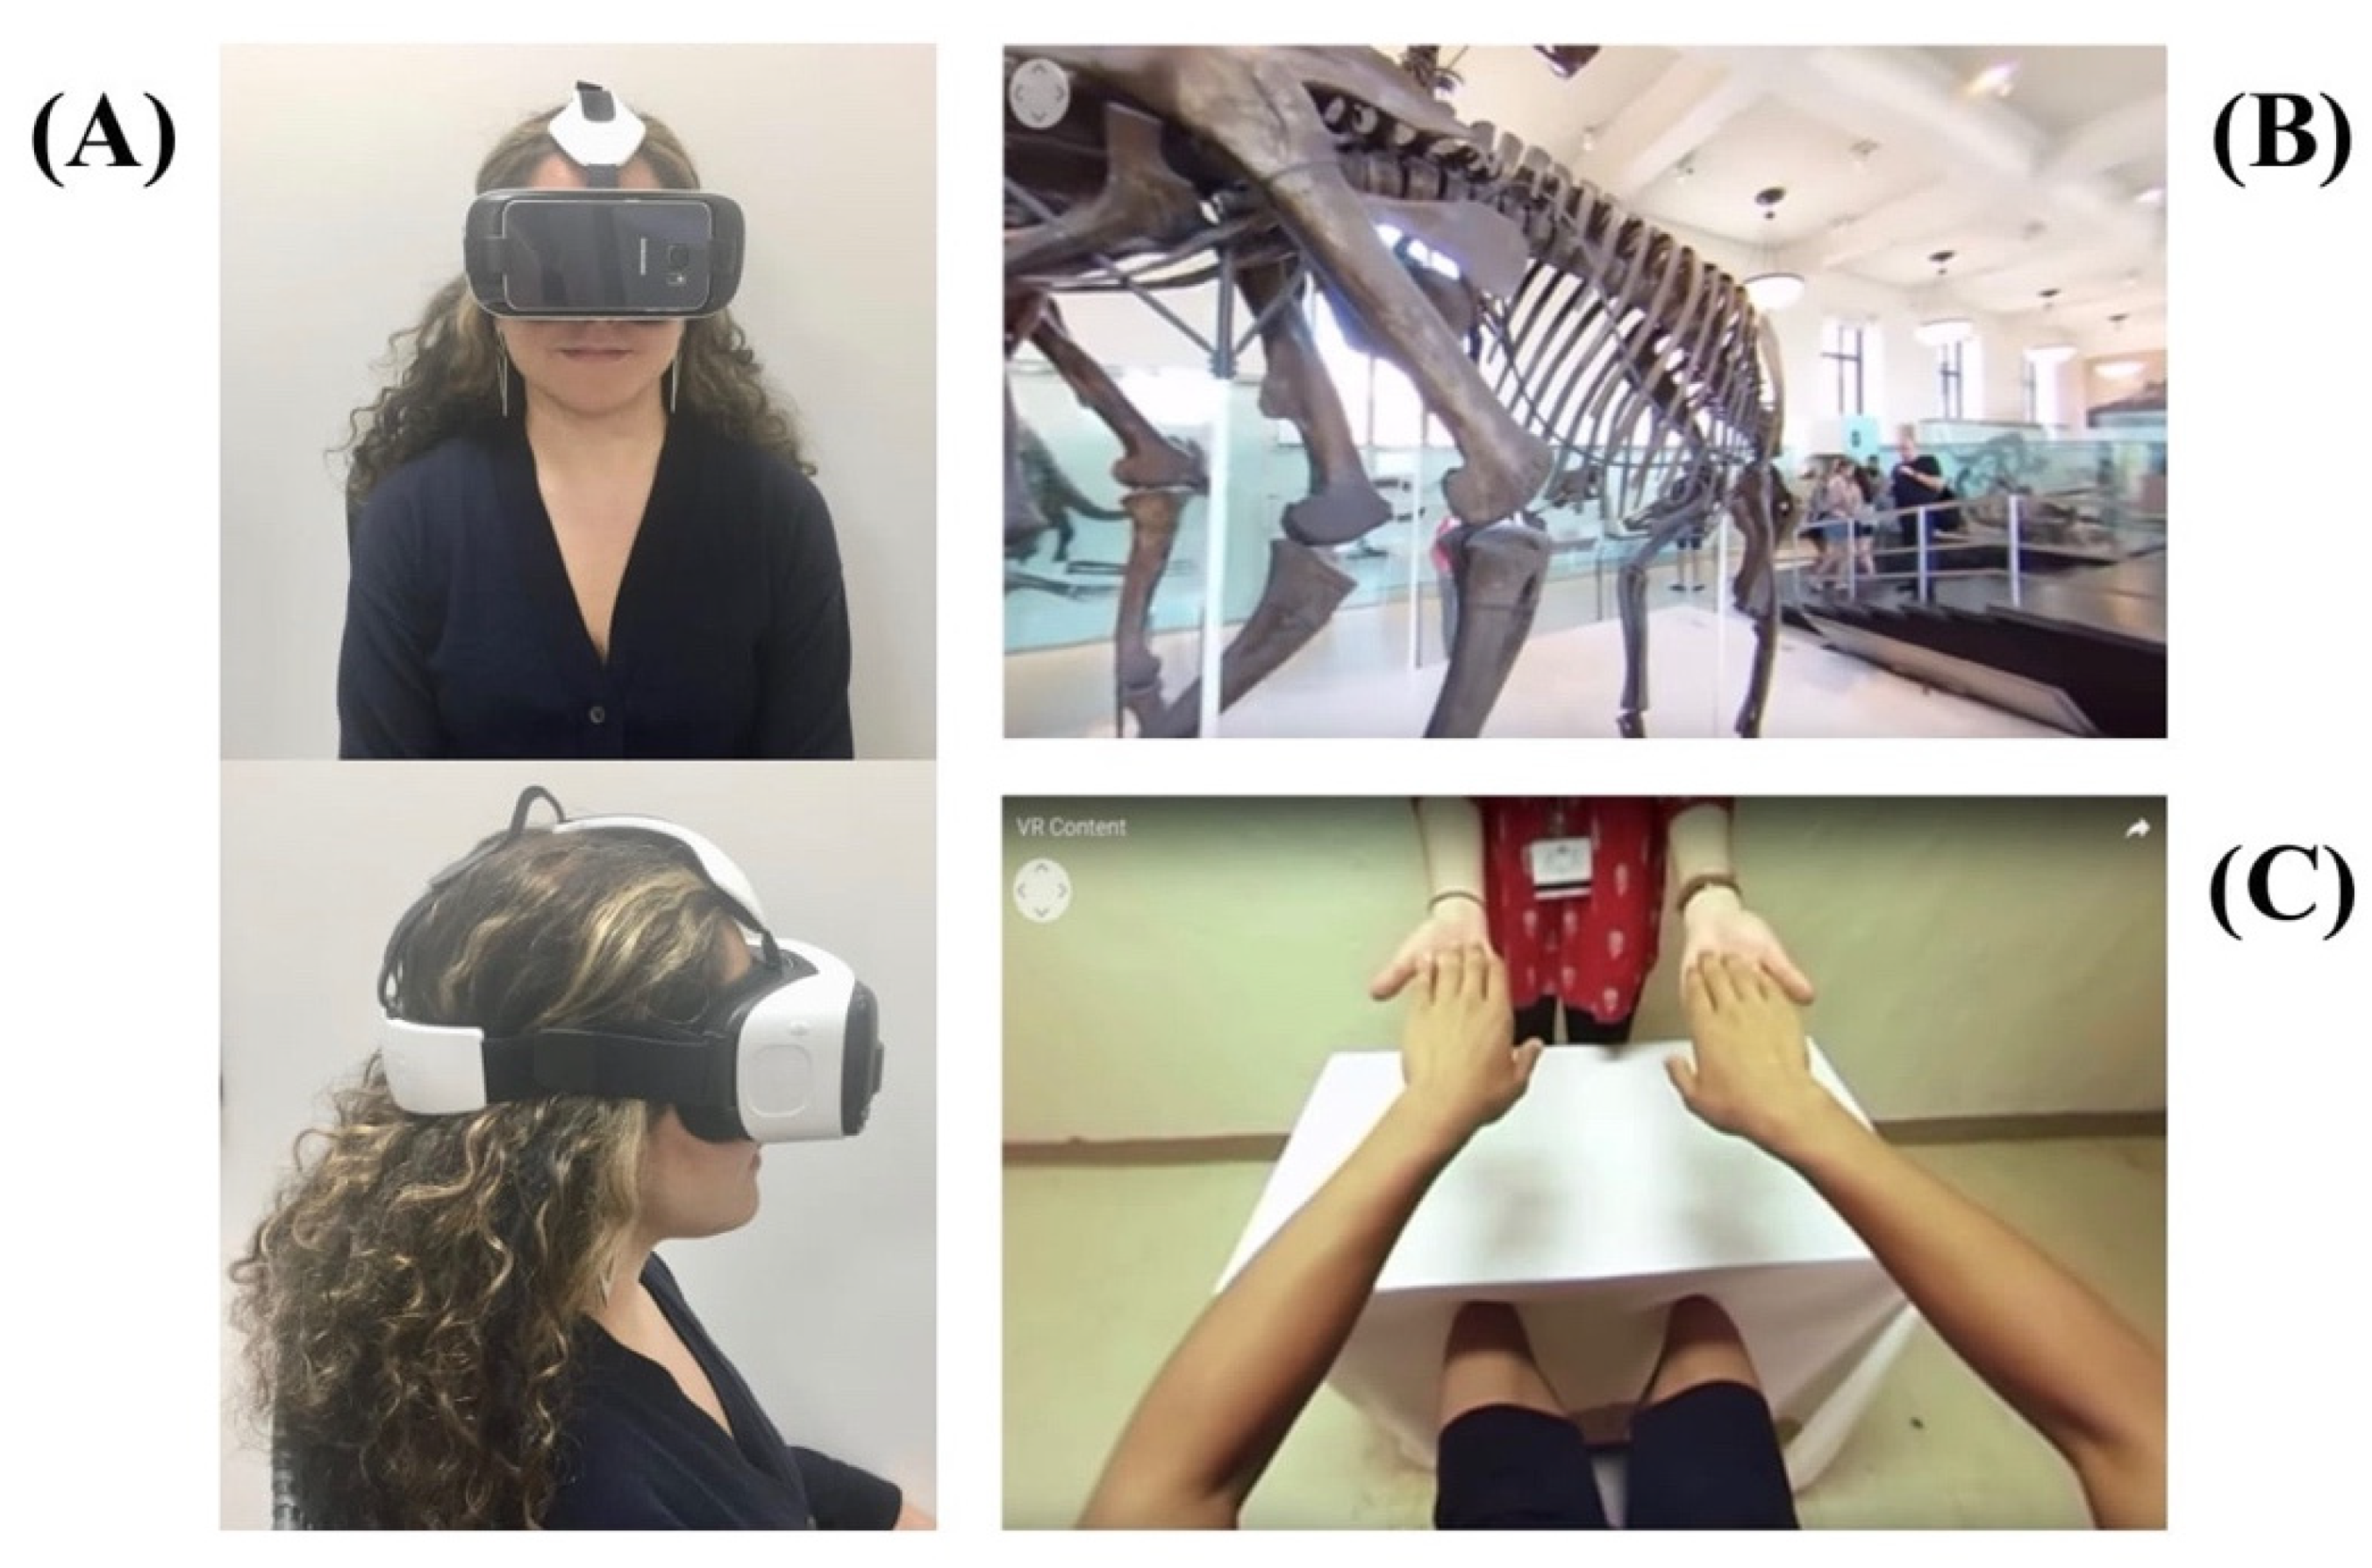 Oculus Rift C4-A VR Virtual Reality Headset System 2 Sensors 2